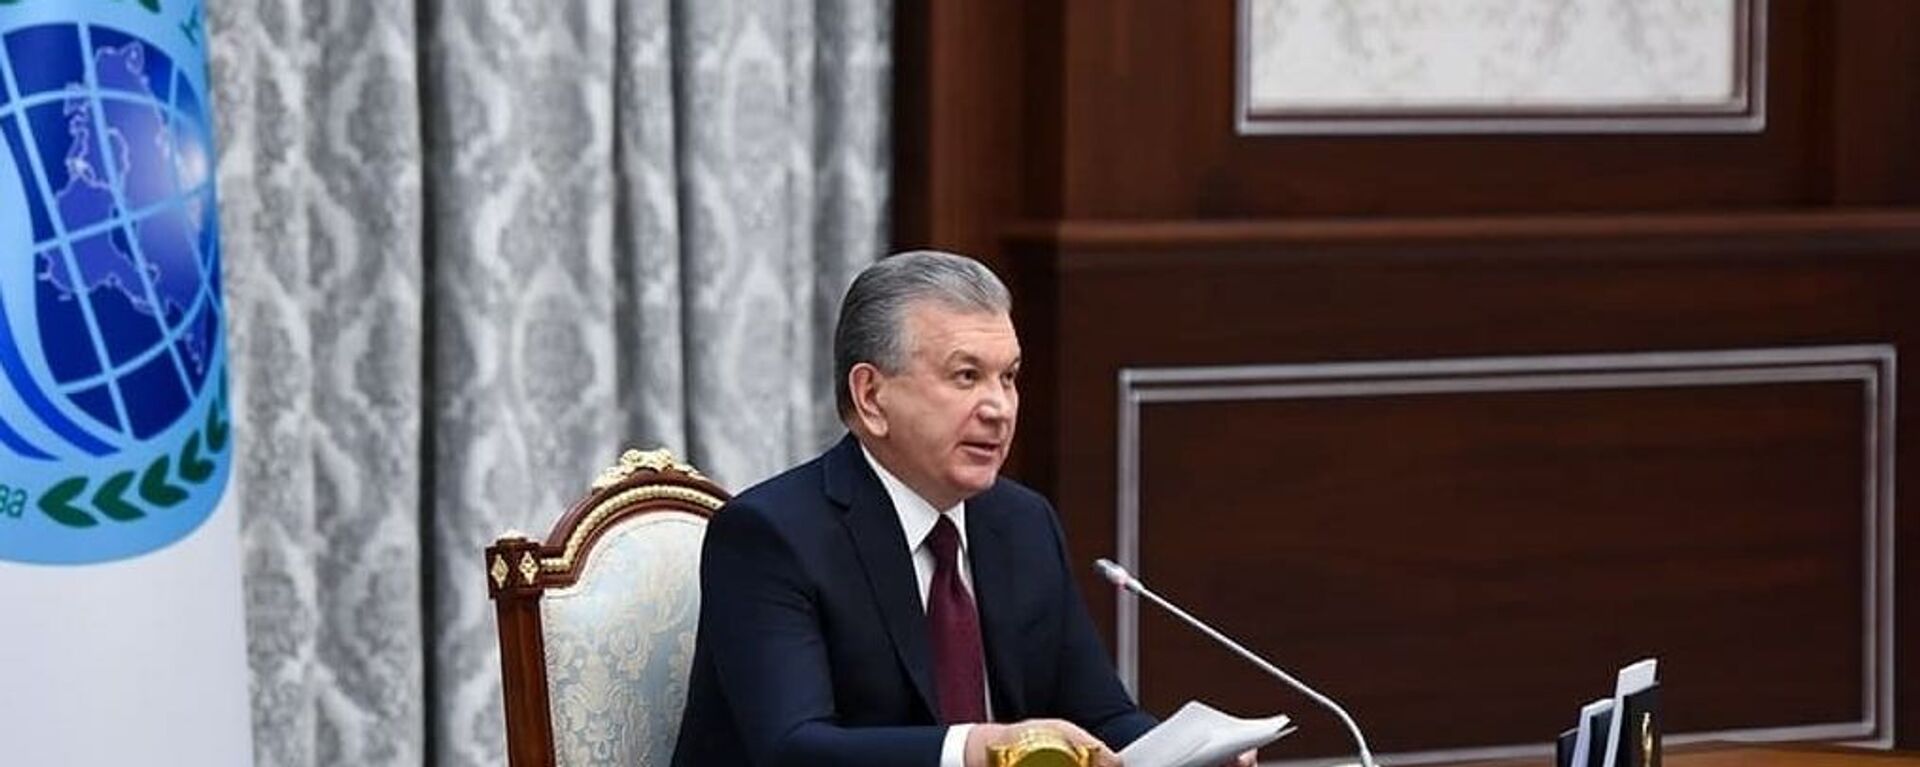 Президент Узбекистана Шавкат Мирзиеев - Sputnik Таджикистан, 1920, 14.04.2021